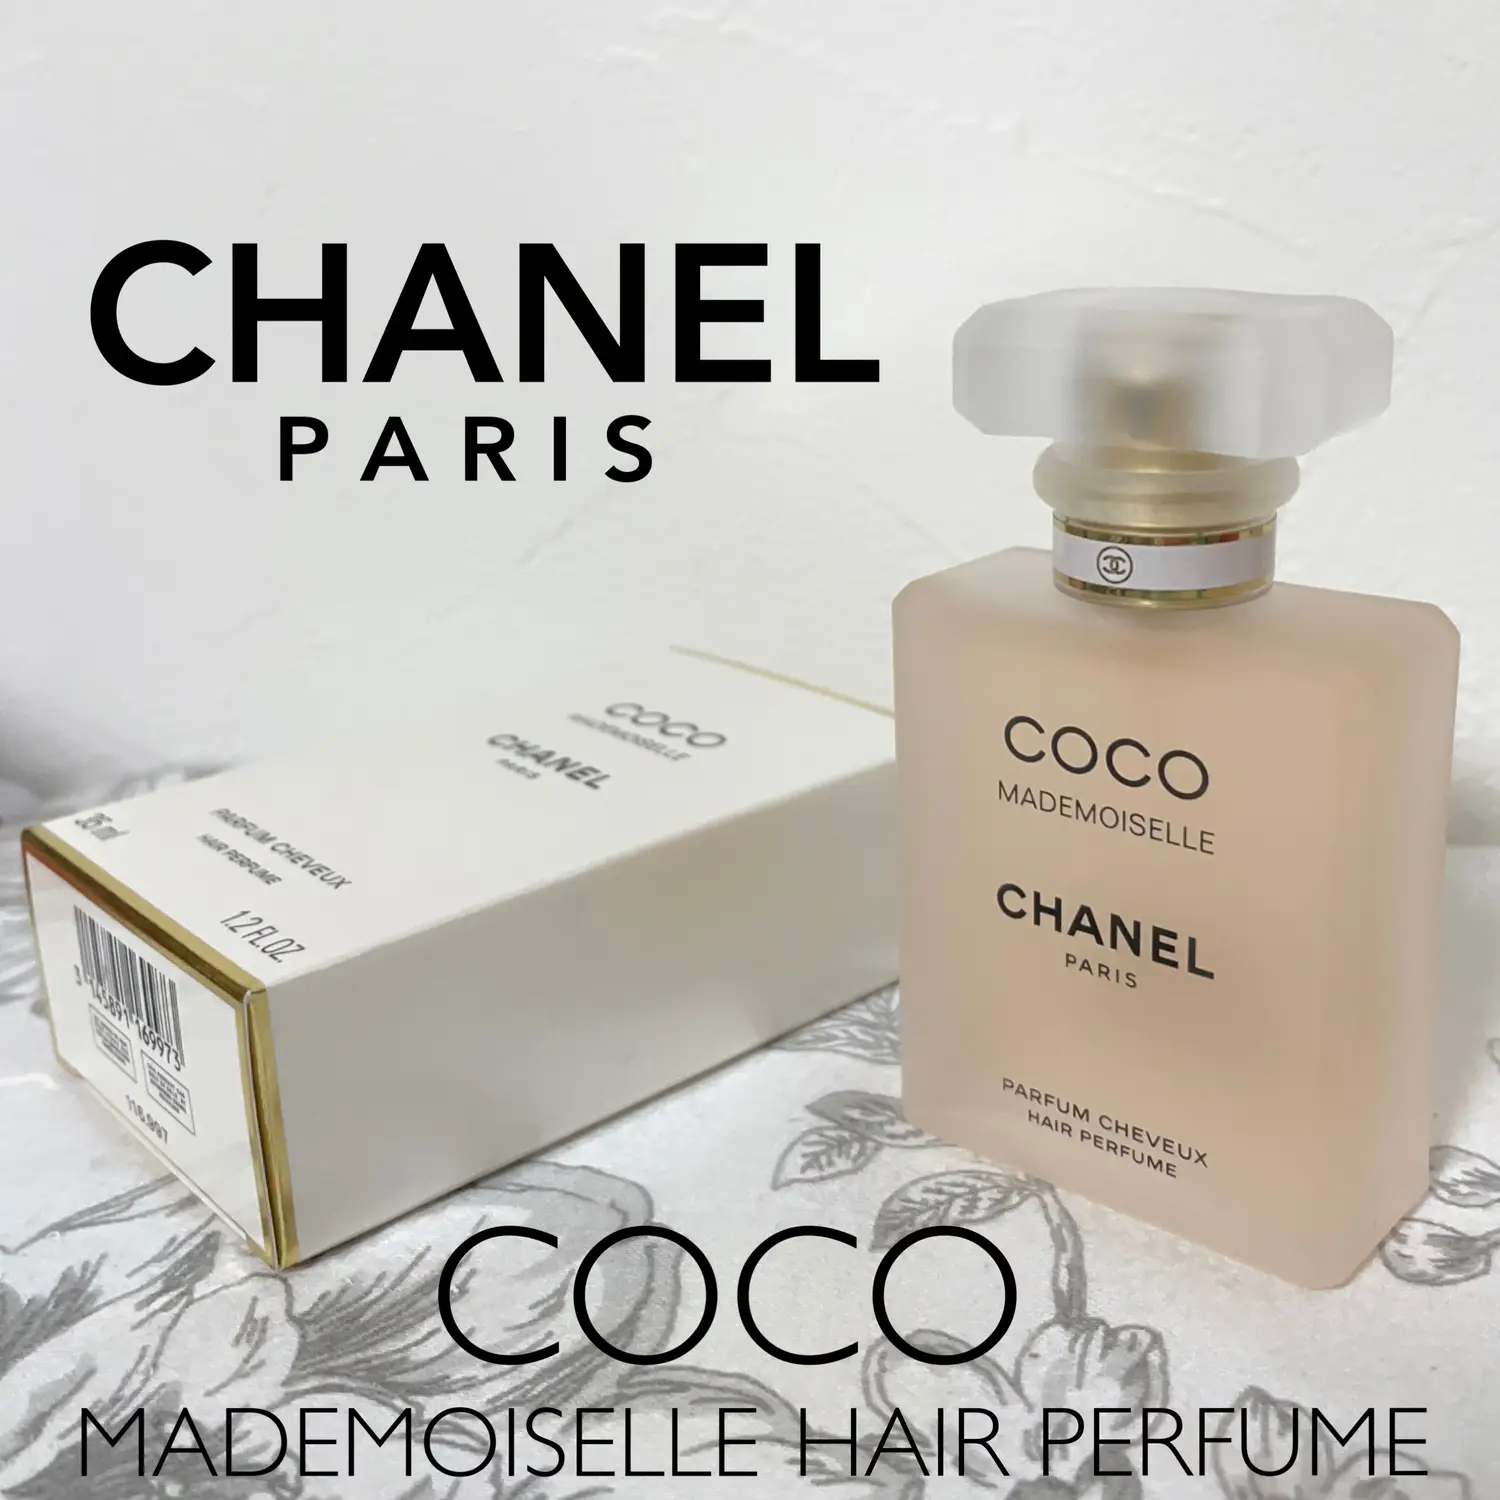 Chanel - Coco Mademoiselle Fresh Hair Mist Spray 35ml/1.2oz - Hair Mist, Free Worldwide Shipping